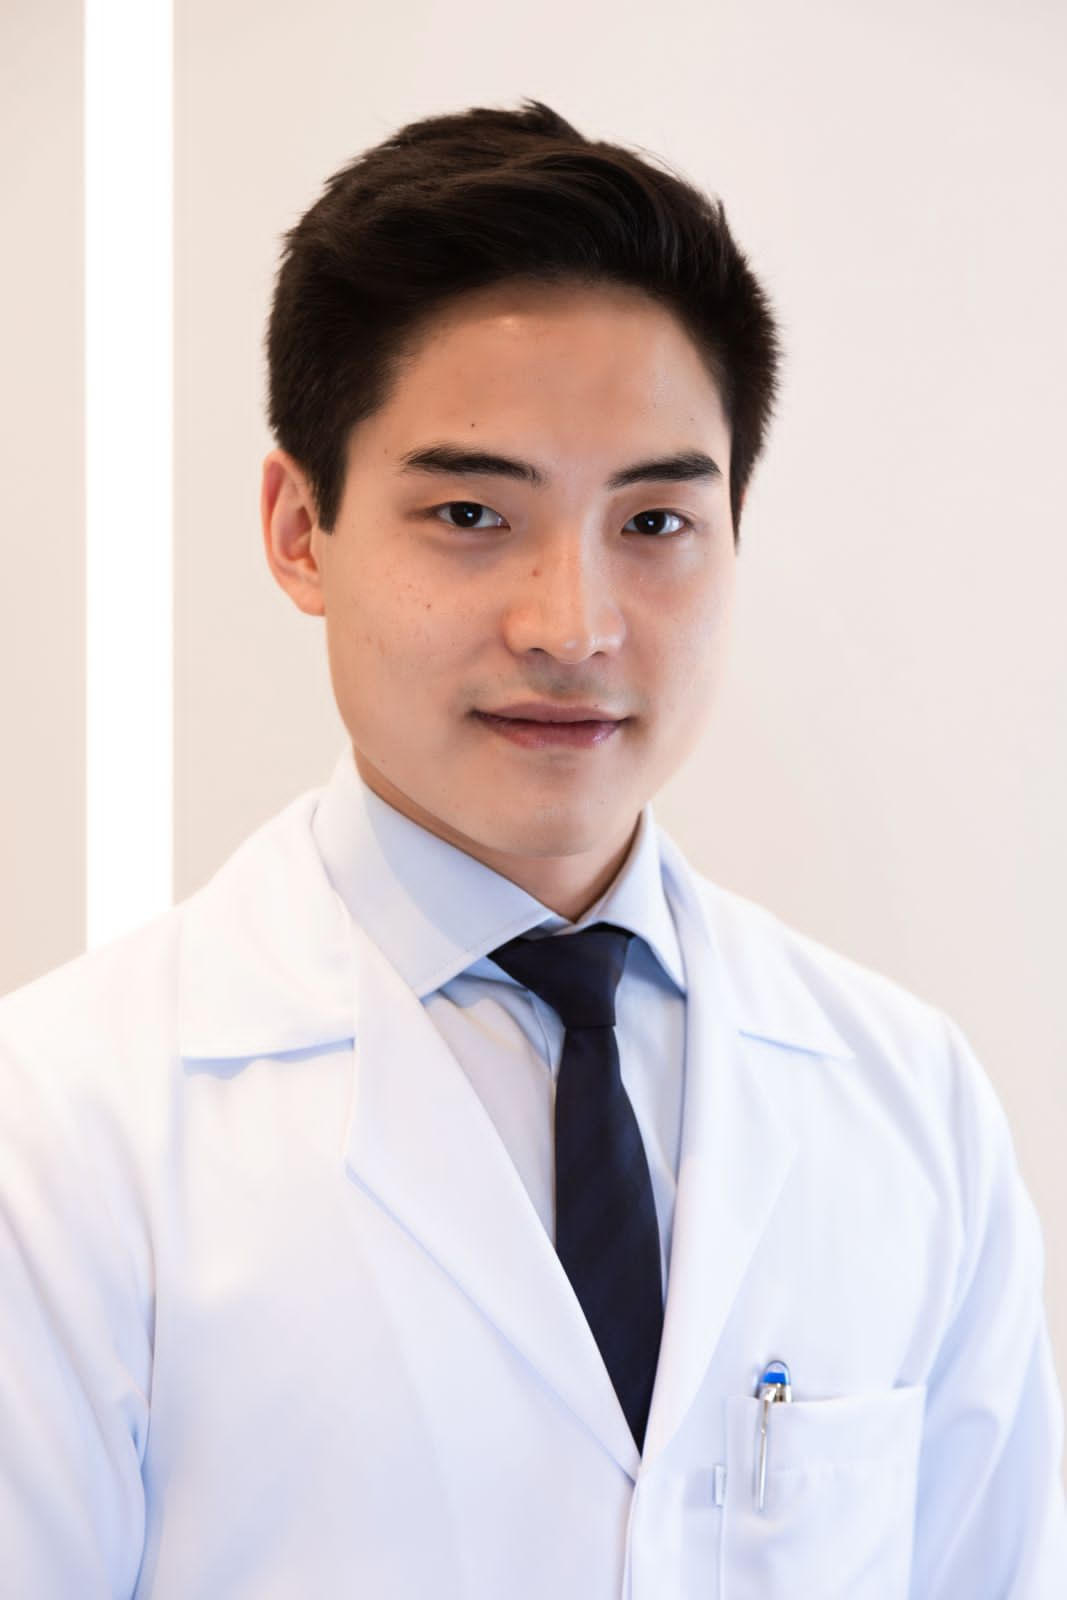 Dr. Dan Yuta Nagaya